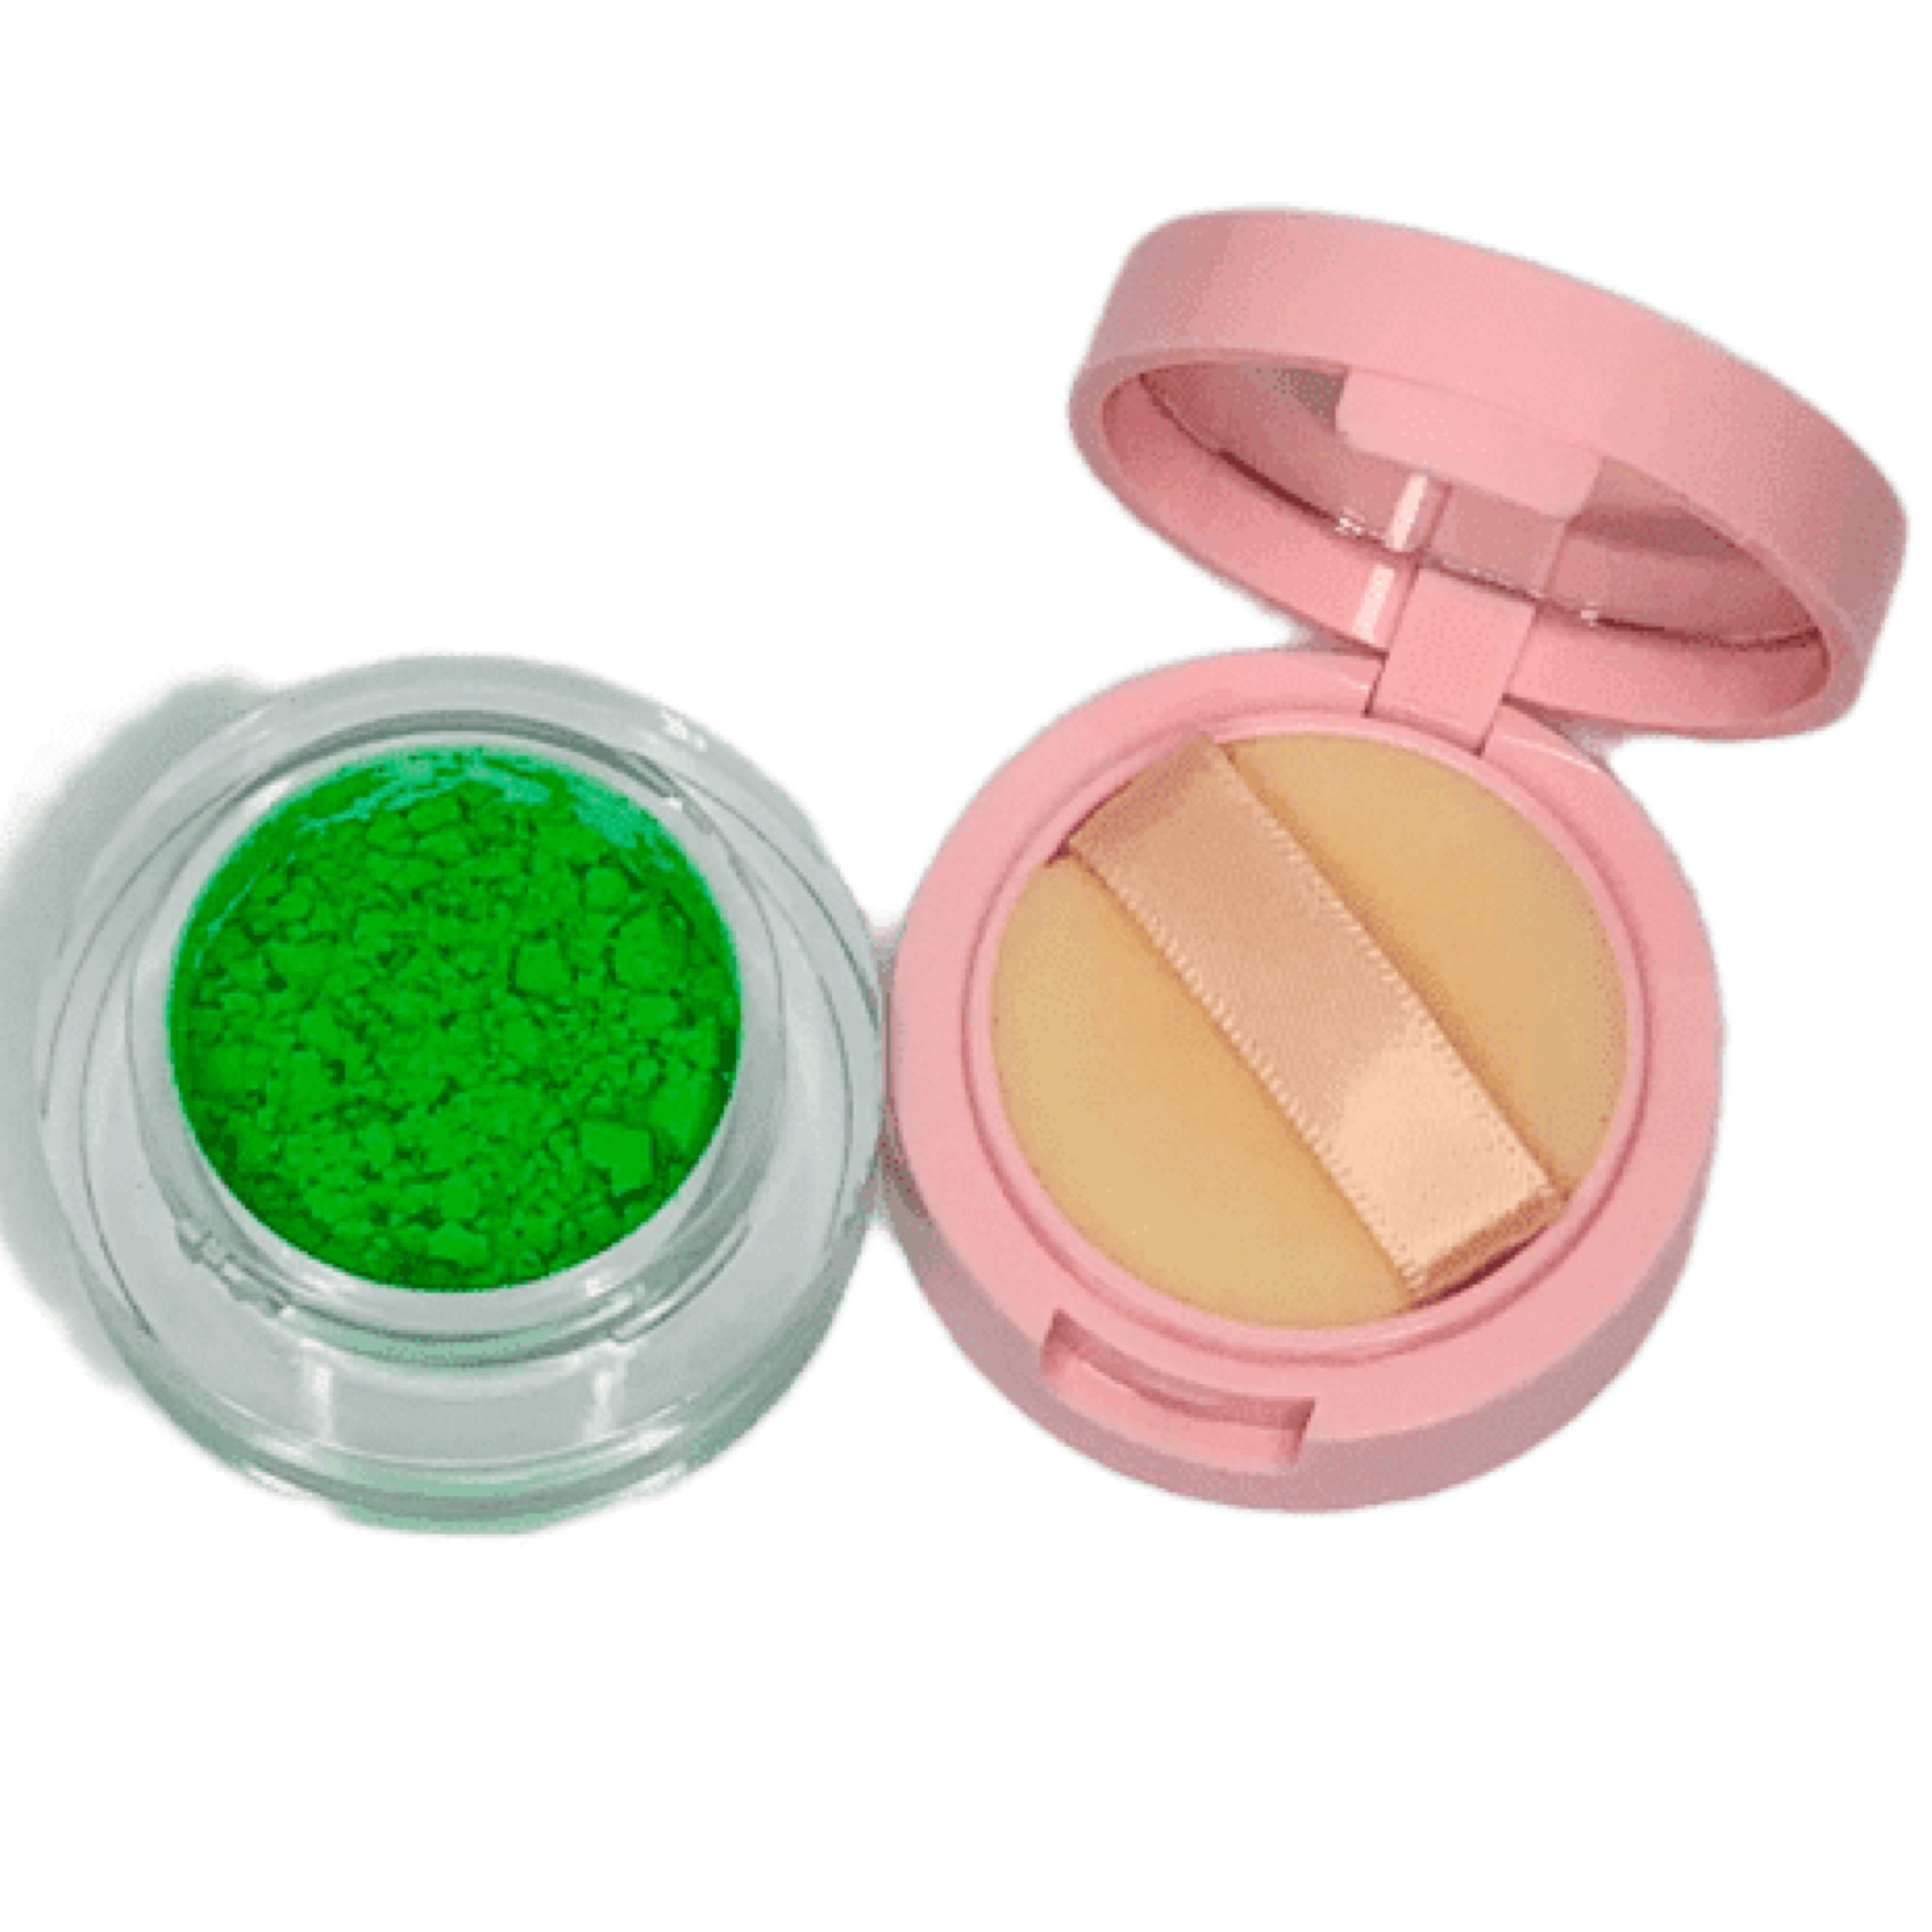 Green Neon Eyeshadow Pigments #7